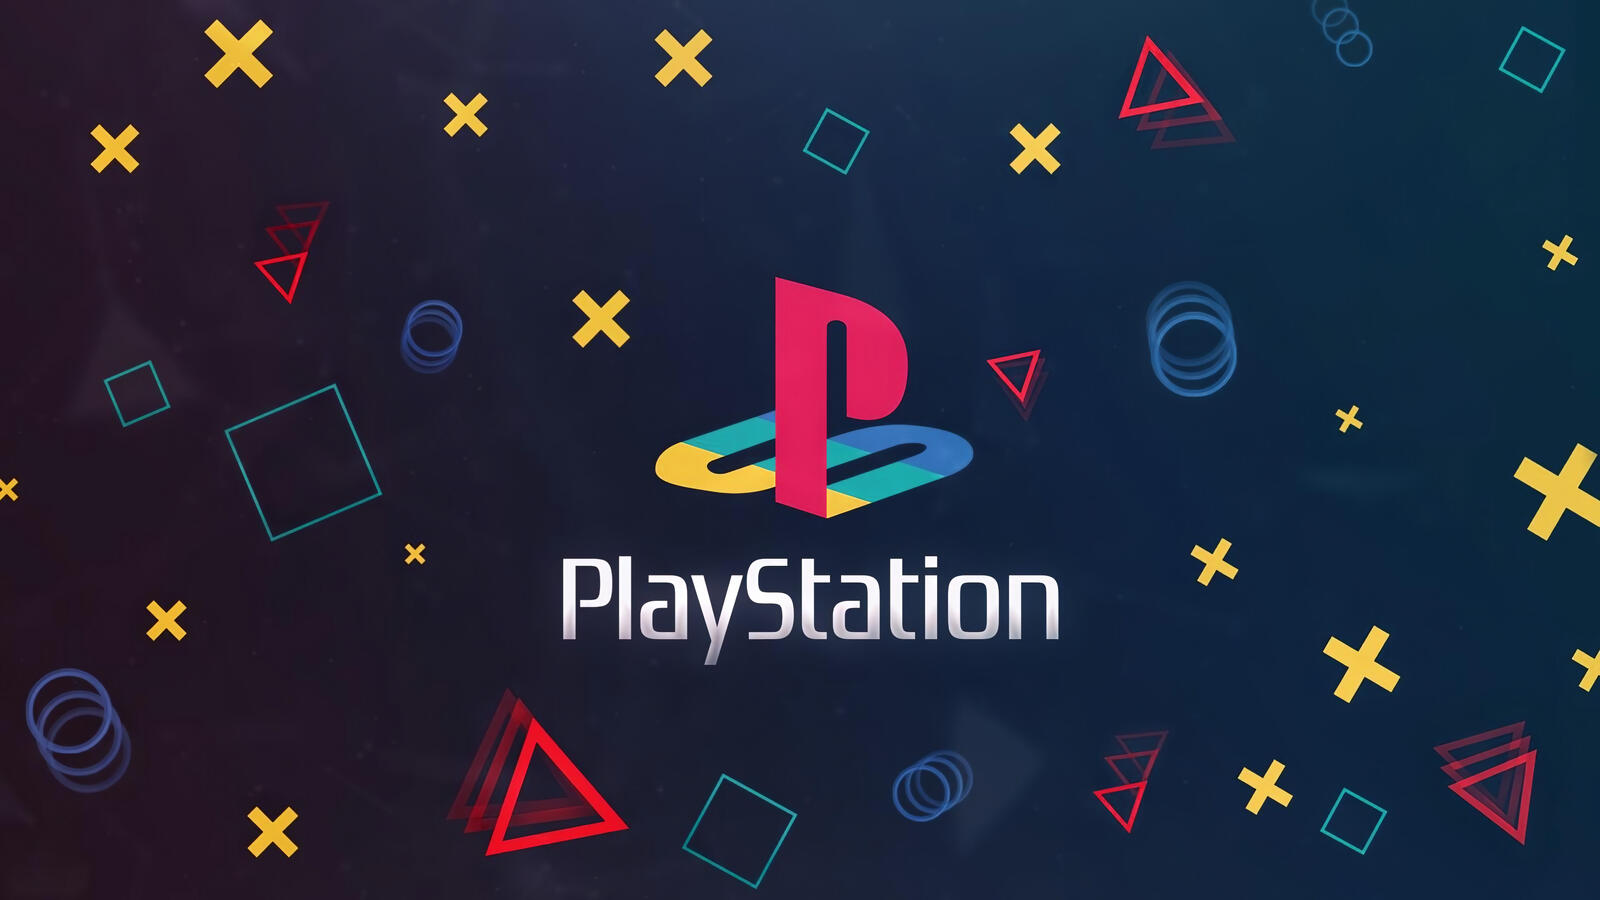 Playstation логотип hi-tech